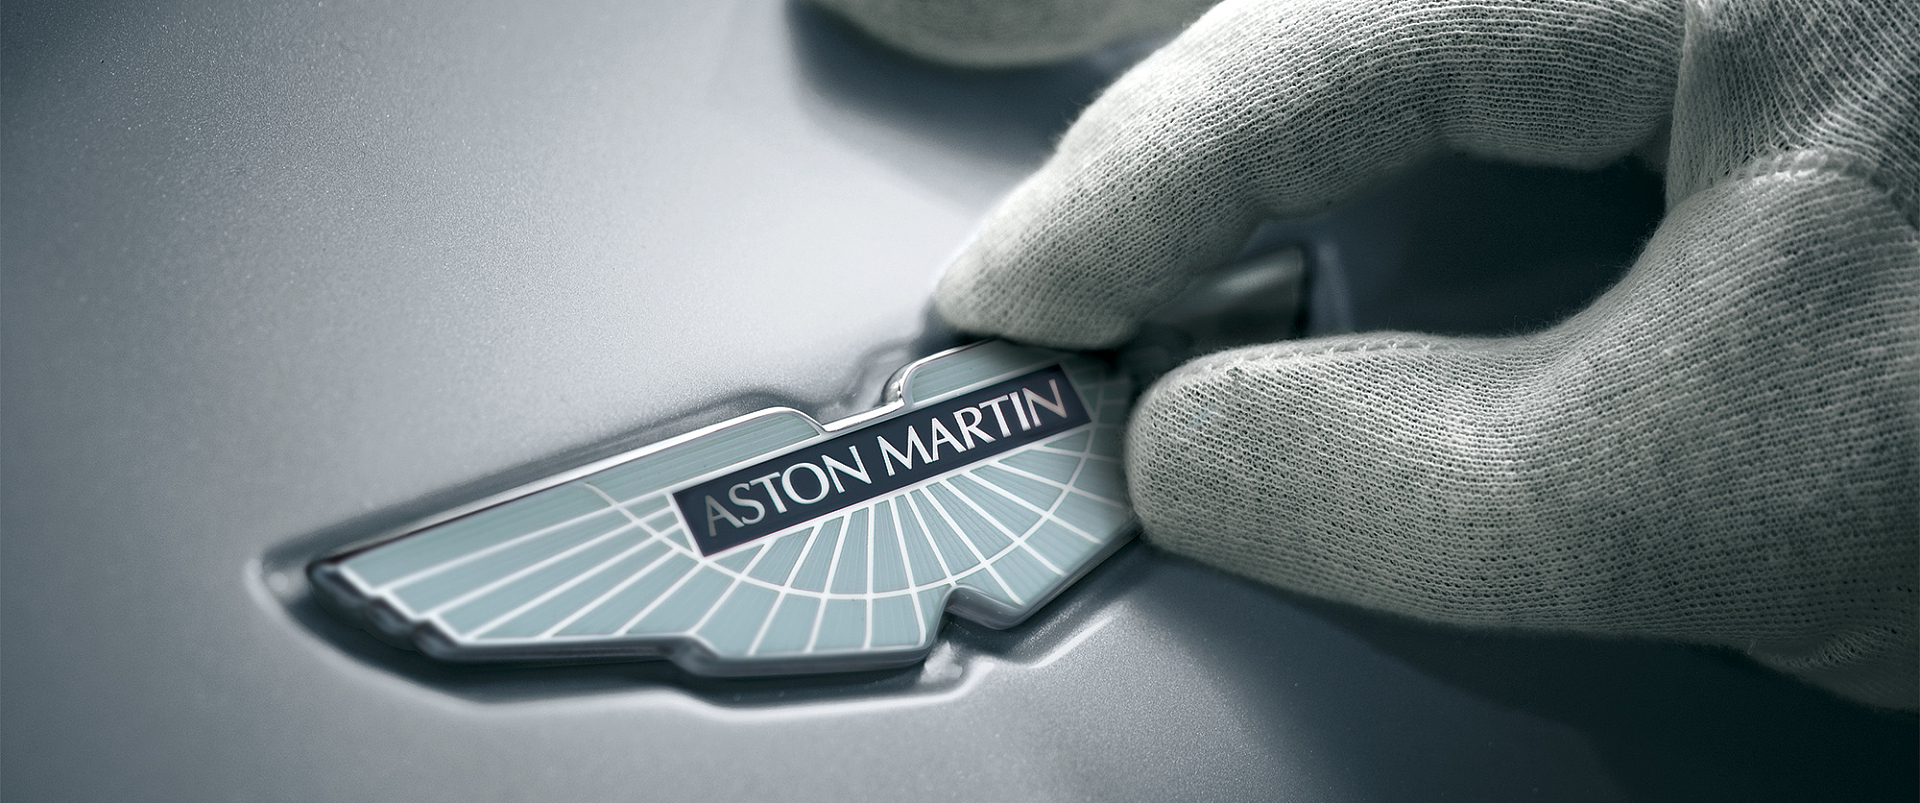 Website Aston Martin Brussels